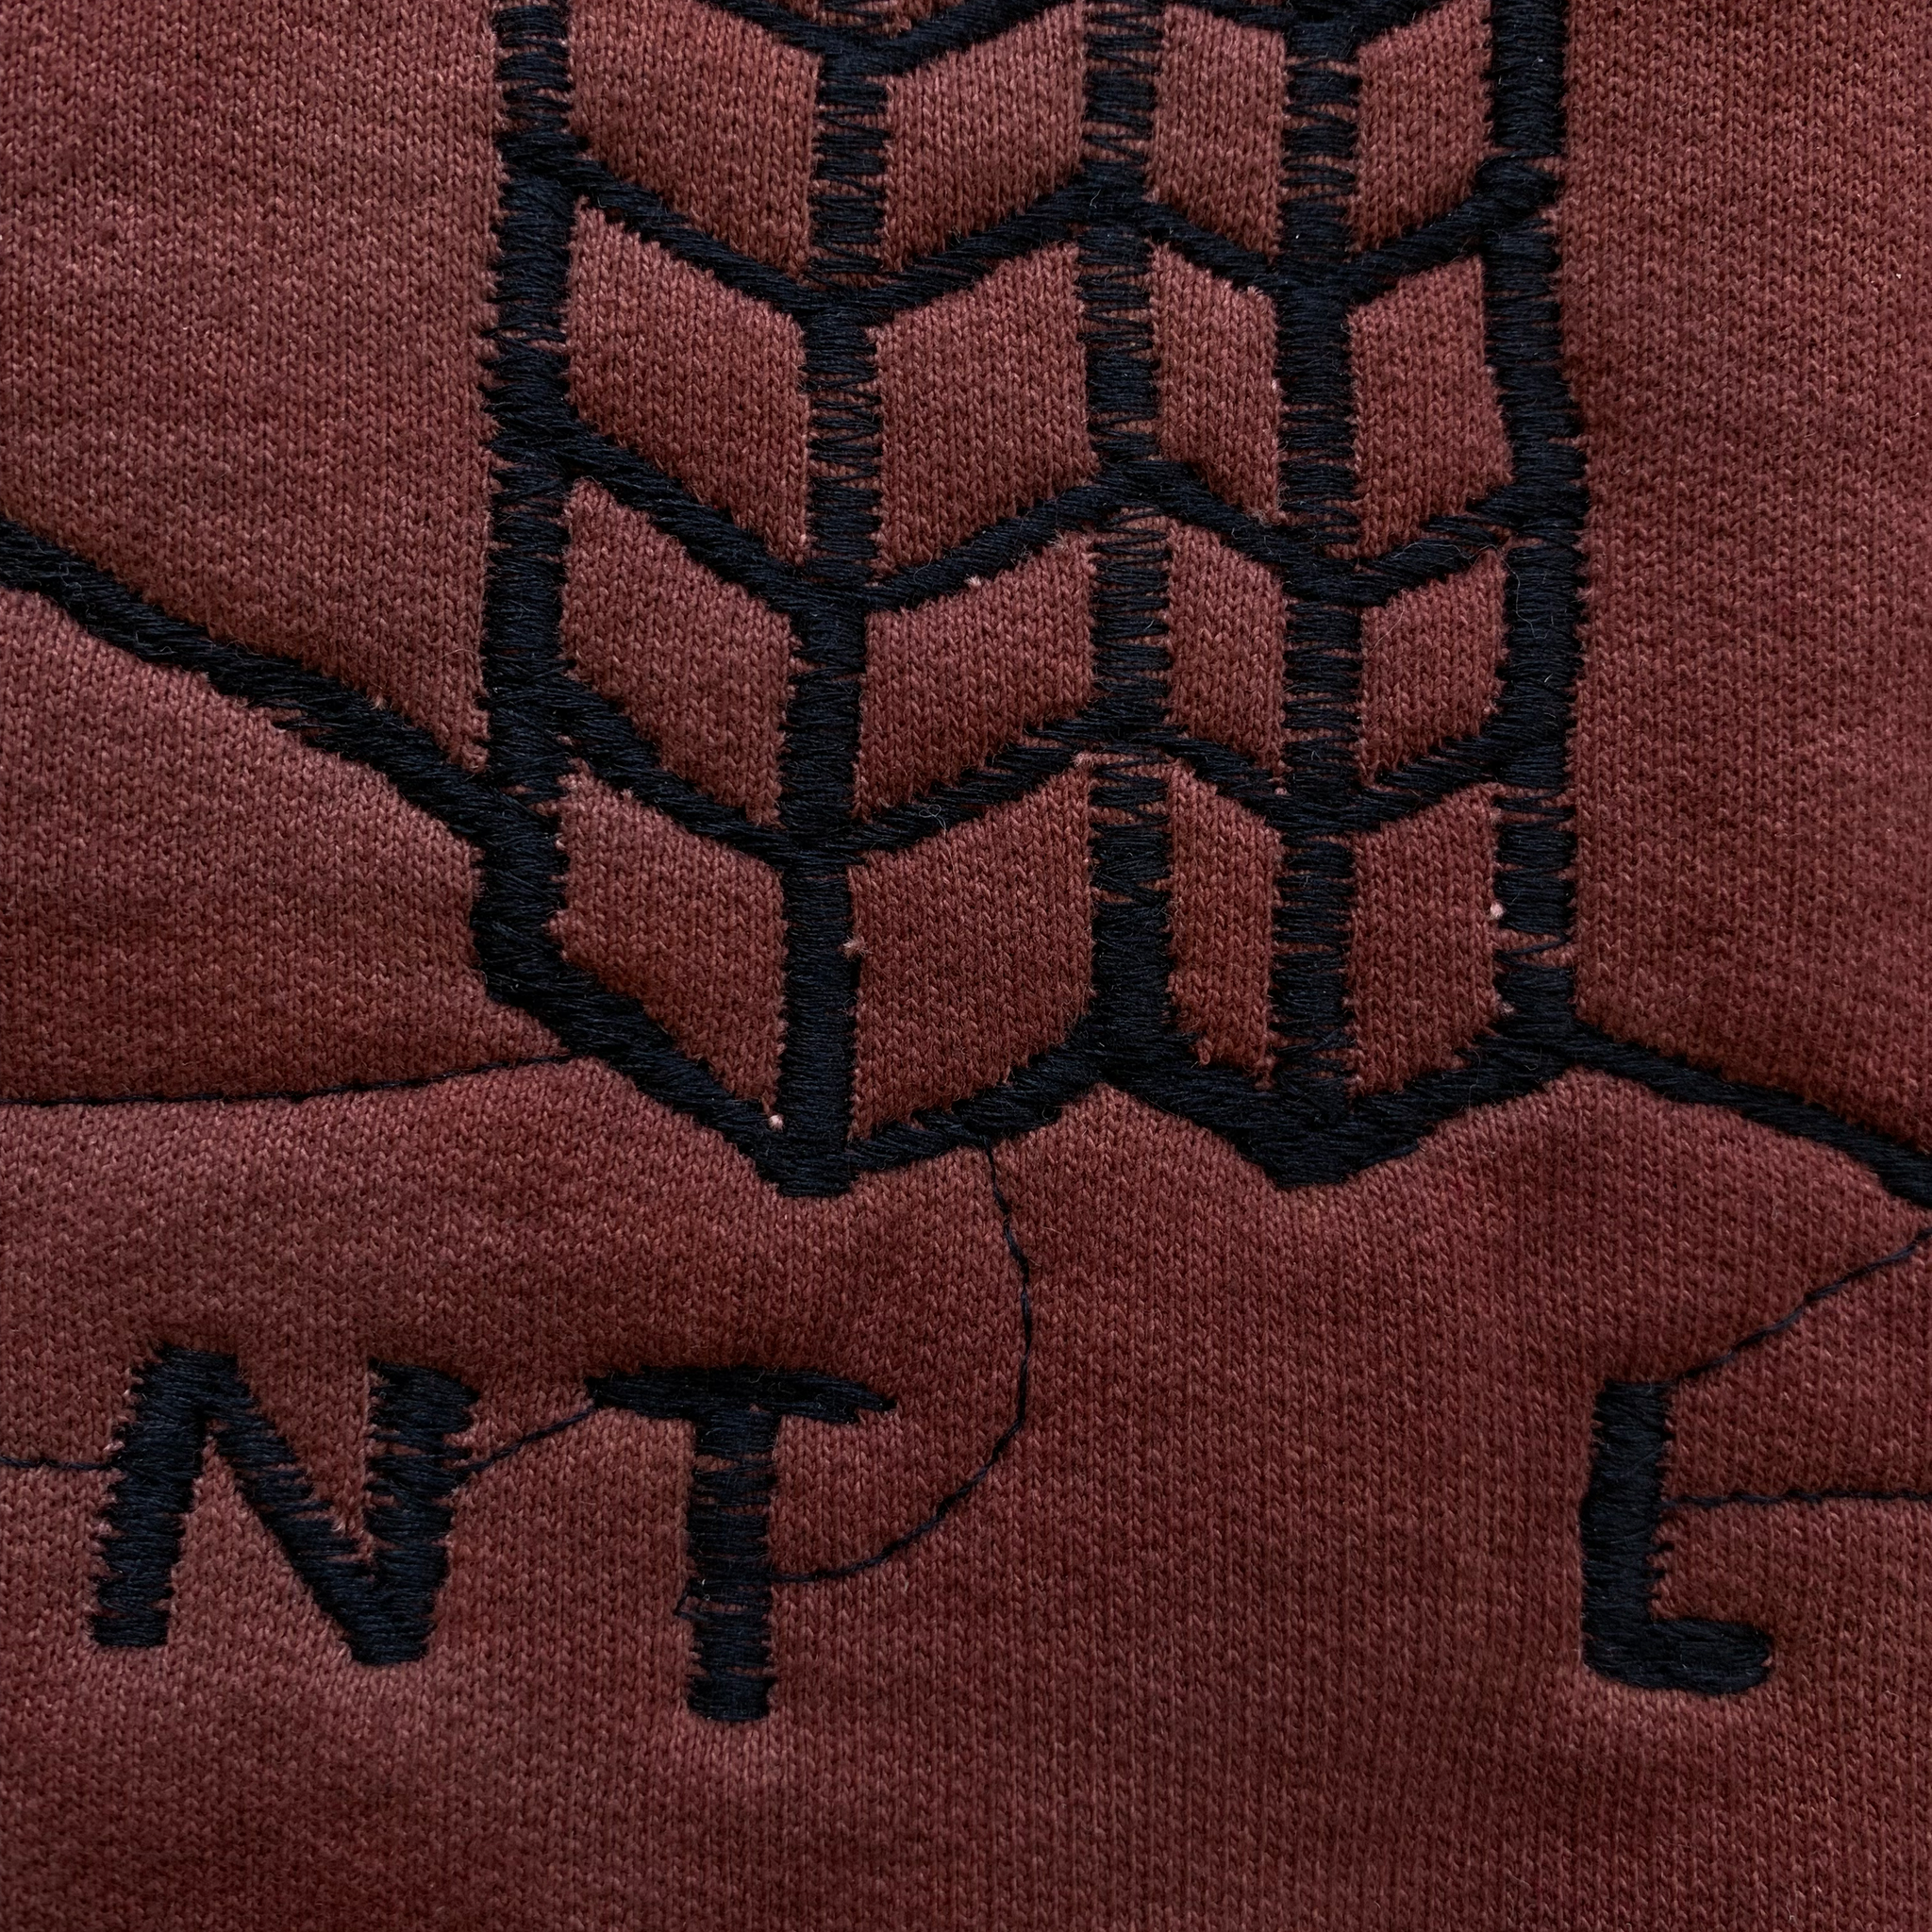 heavy fleece hoodie- organic usa cotton - embroidered - XL SHORT